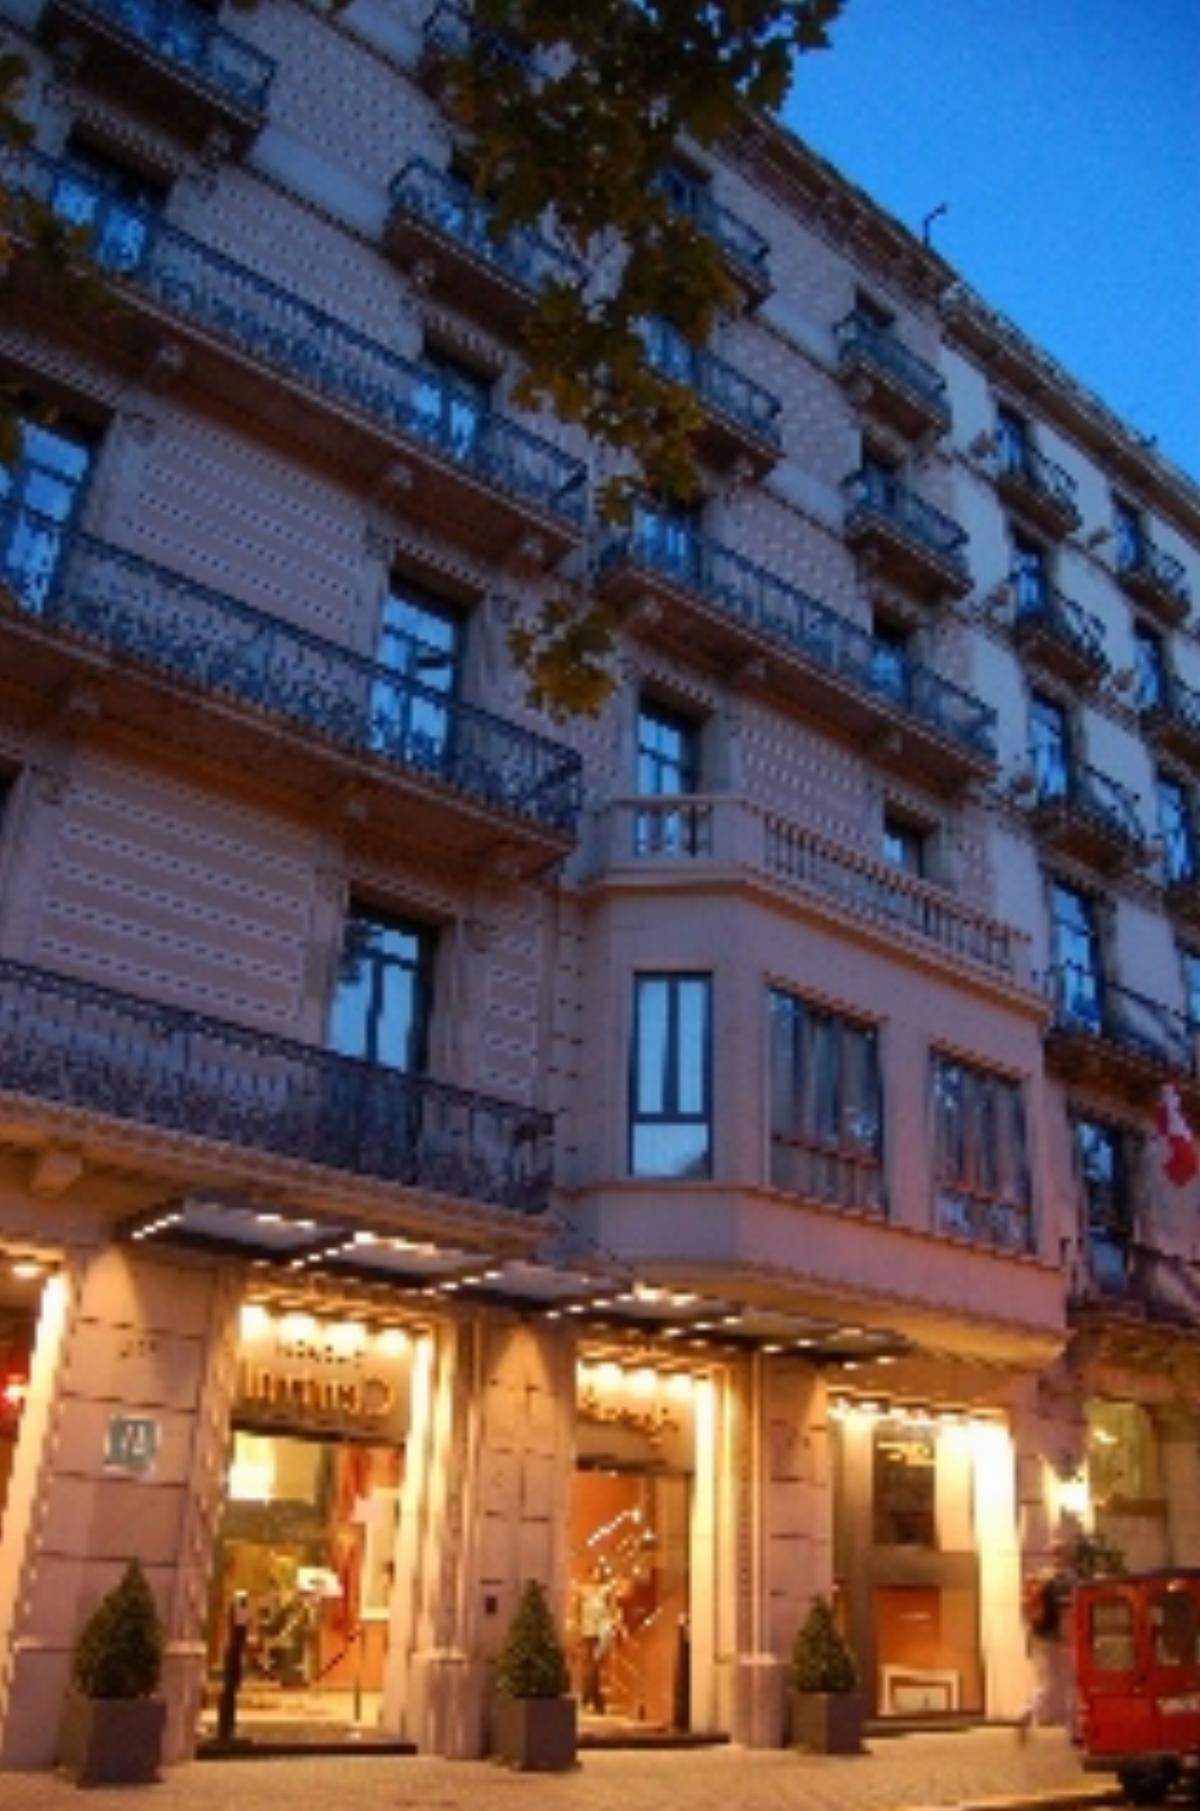 Central Hotel Barcelona Spain